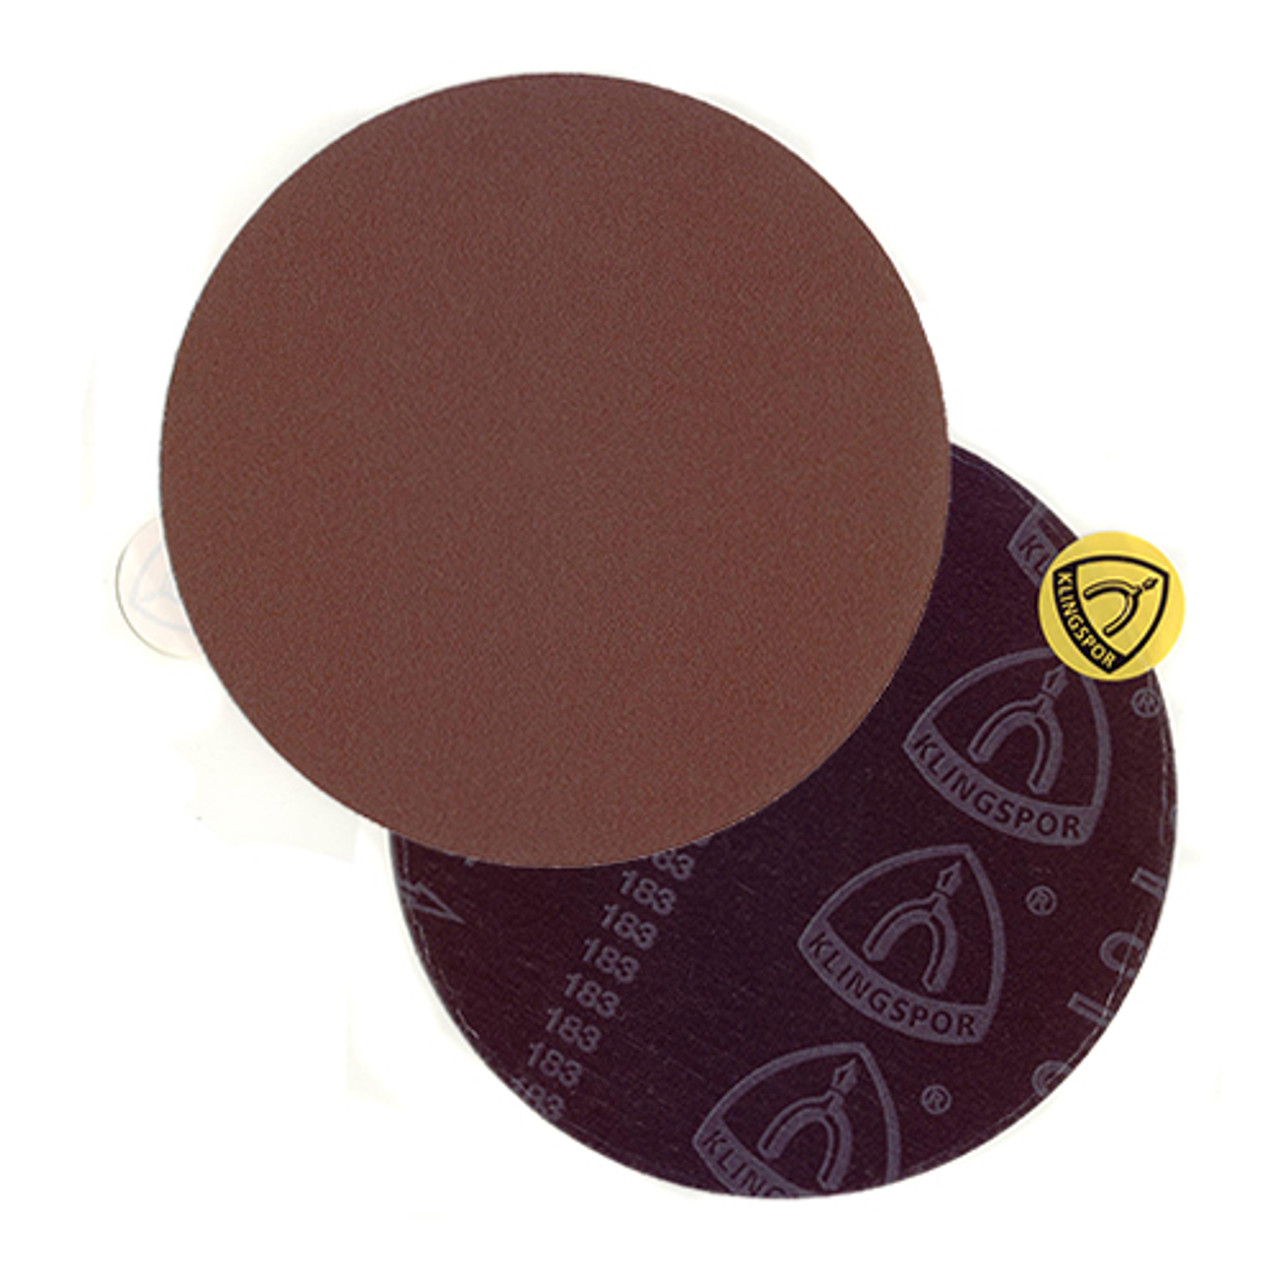 Klingspor Abrasives 8" No Hole, Cloth Backed, Pressure Sensitive Adhesive, 220 Grit Discs, 5pk